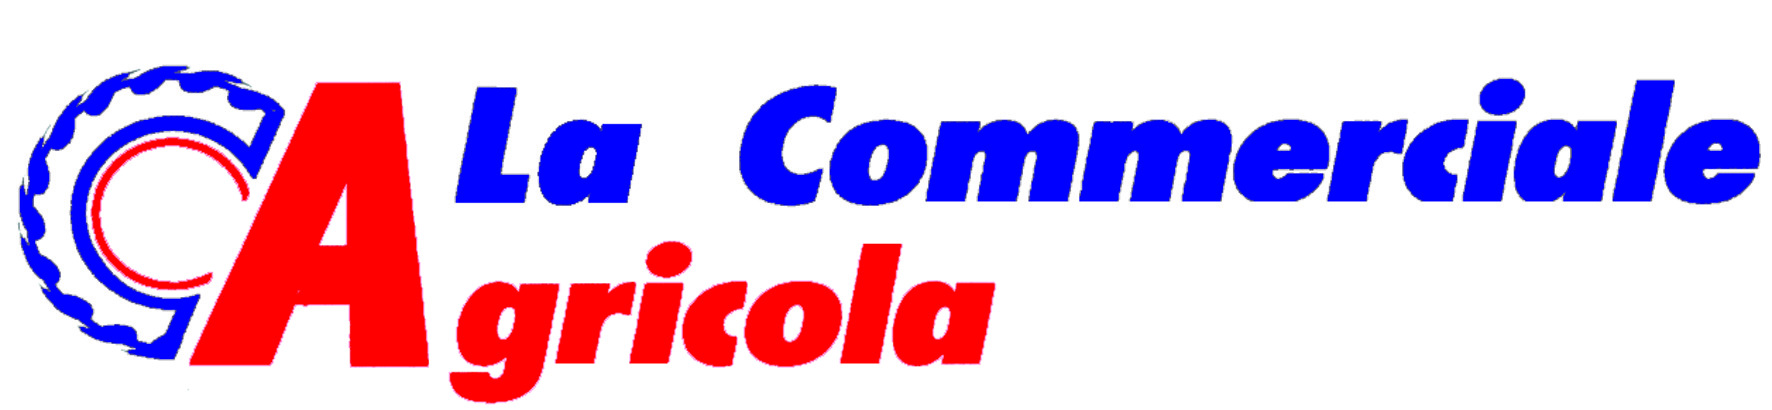 Commerciale Agricola logo